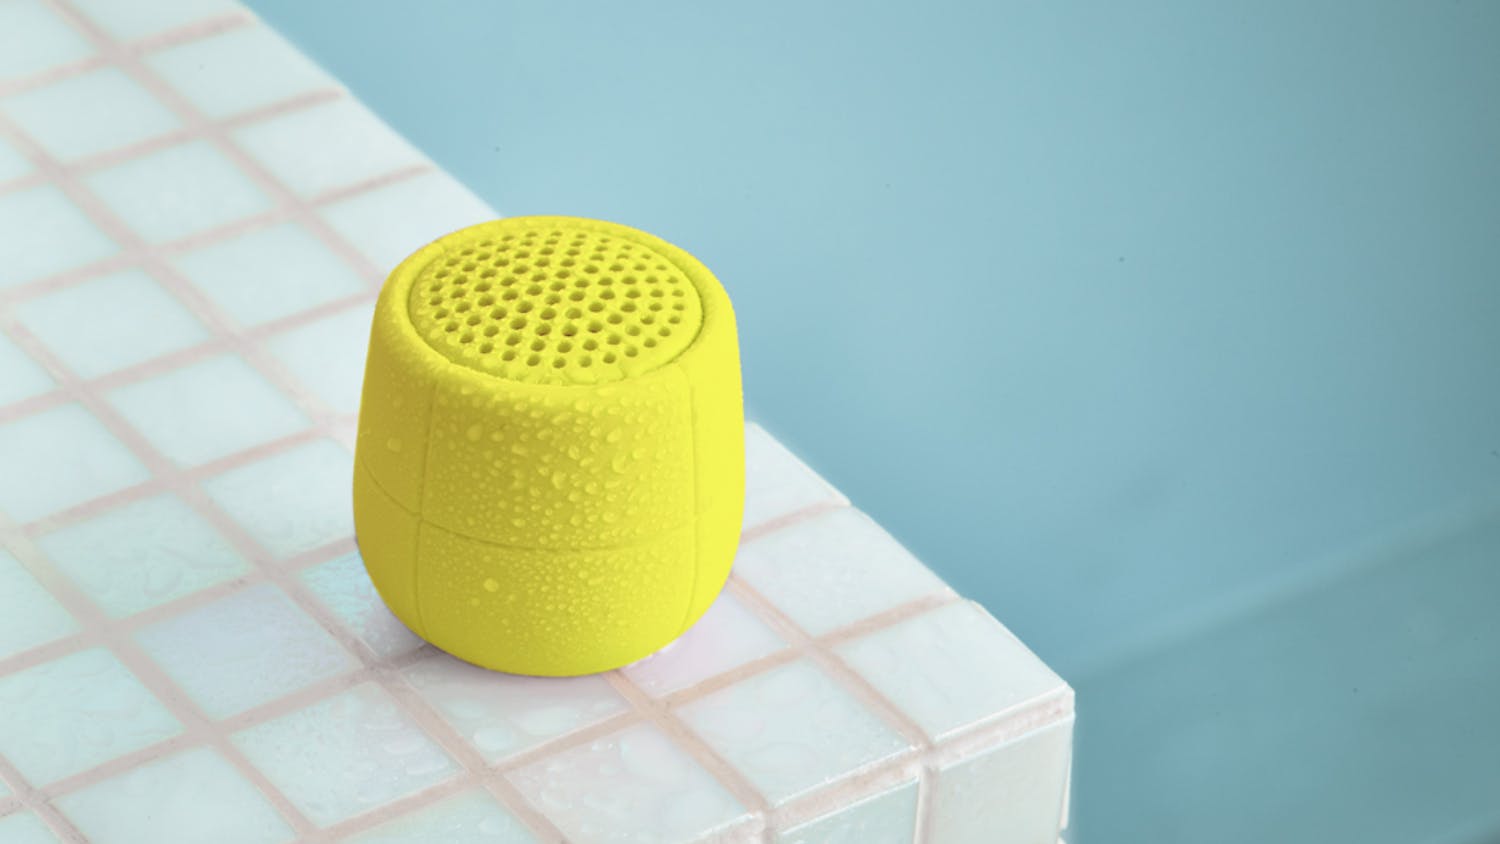 Lexon Mino X Bluetooth Speaker - Yellow